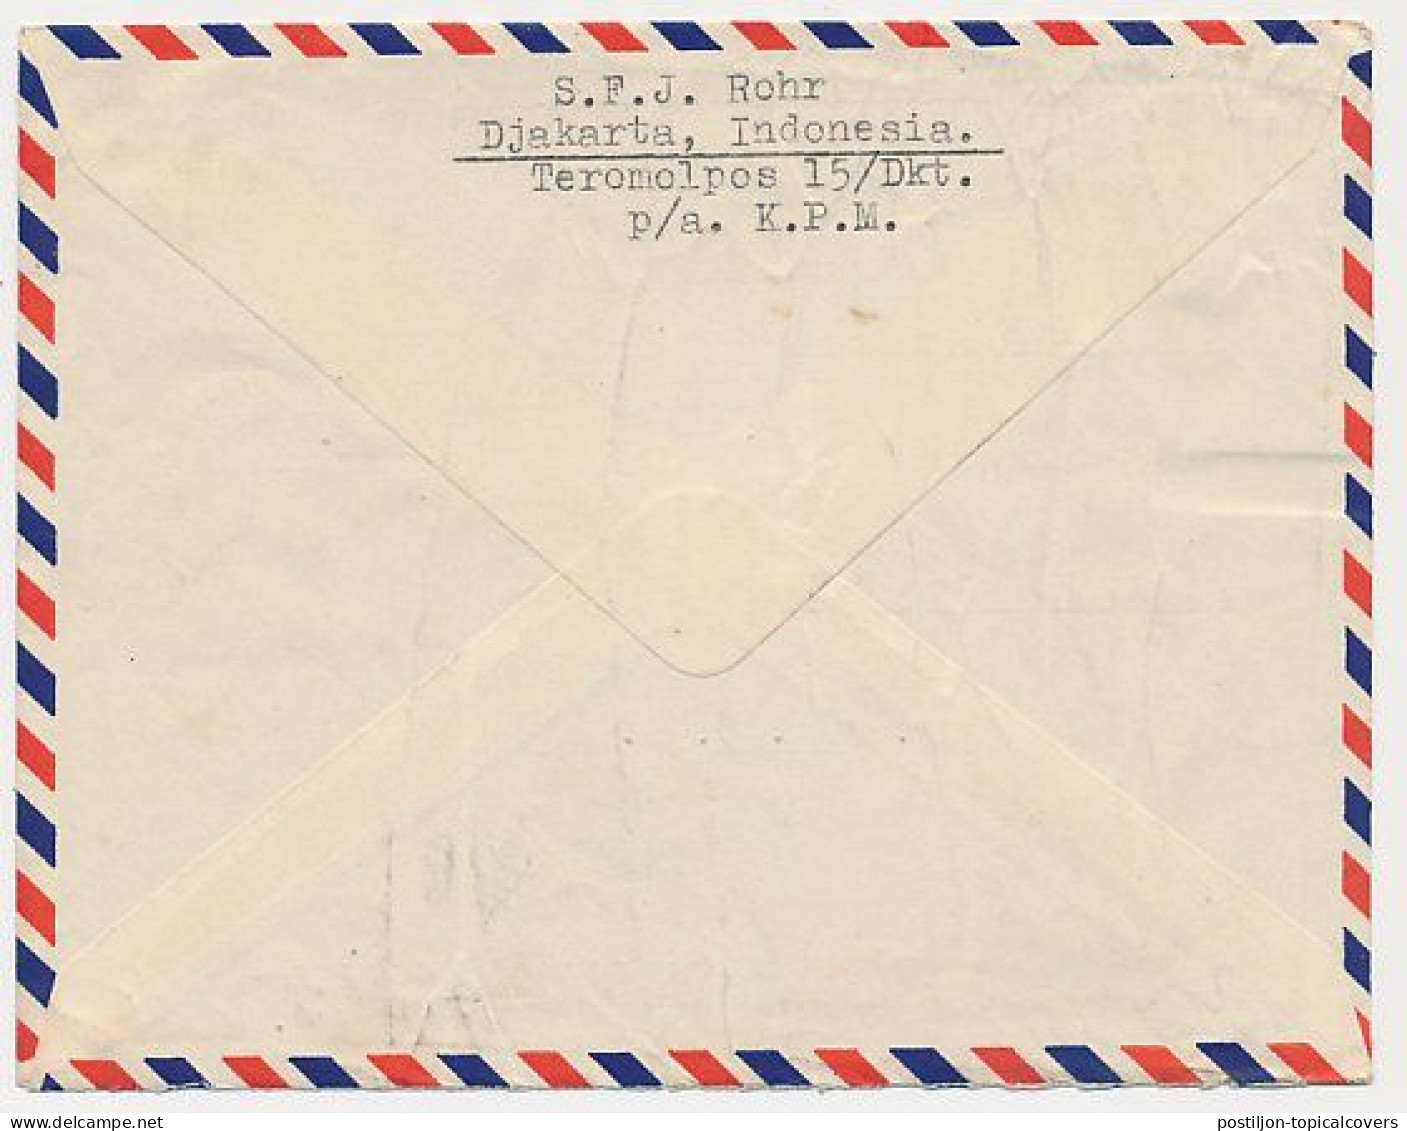 Crash Mail Cover Hong Kong - Zeist The Netherlands 1953 - Nierinck 530502 -  Calcutta India - Comet - Briefe U. Dokumente